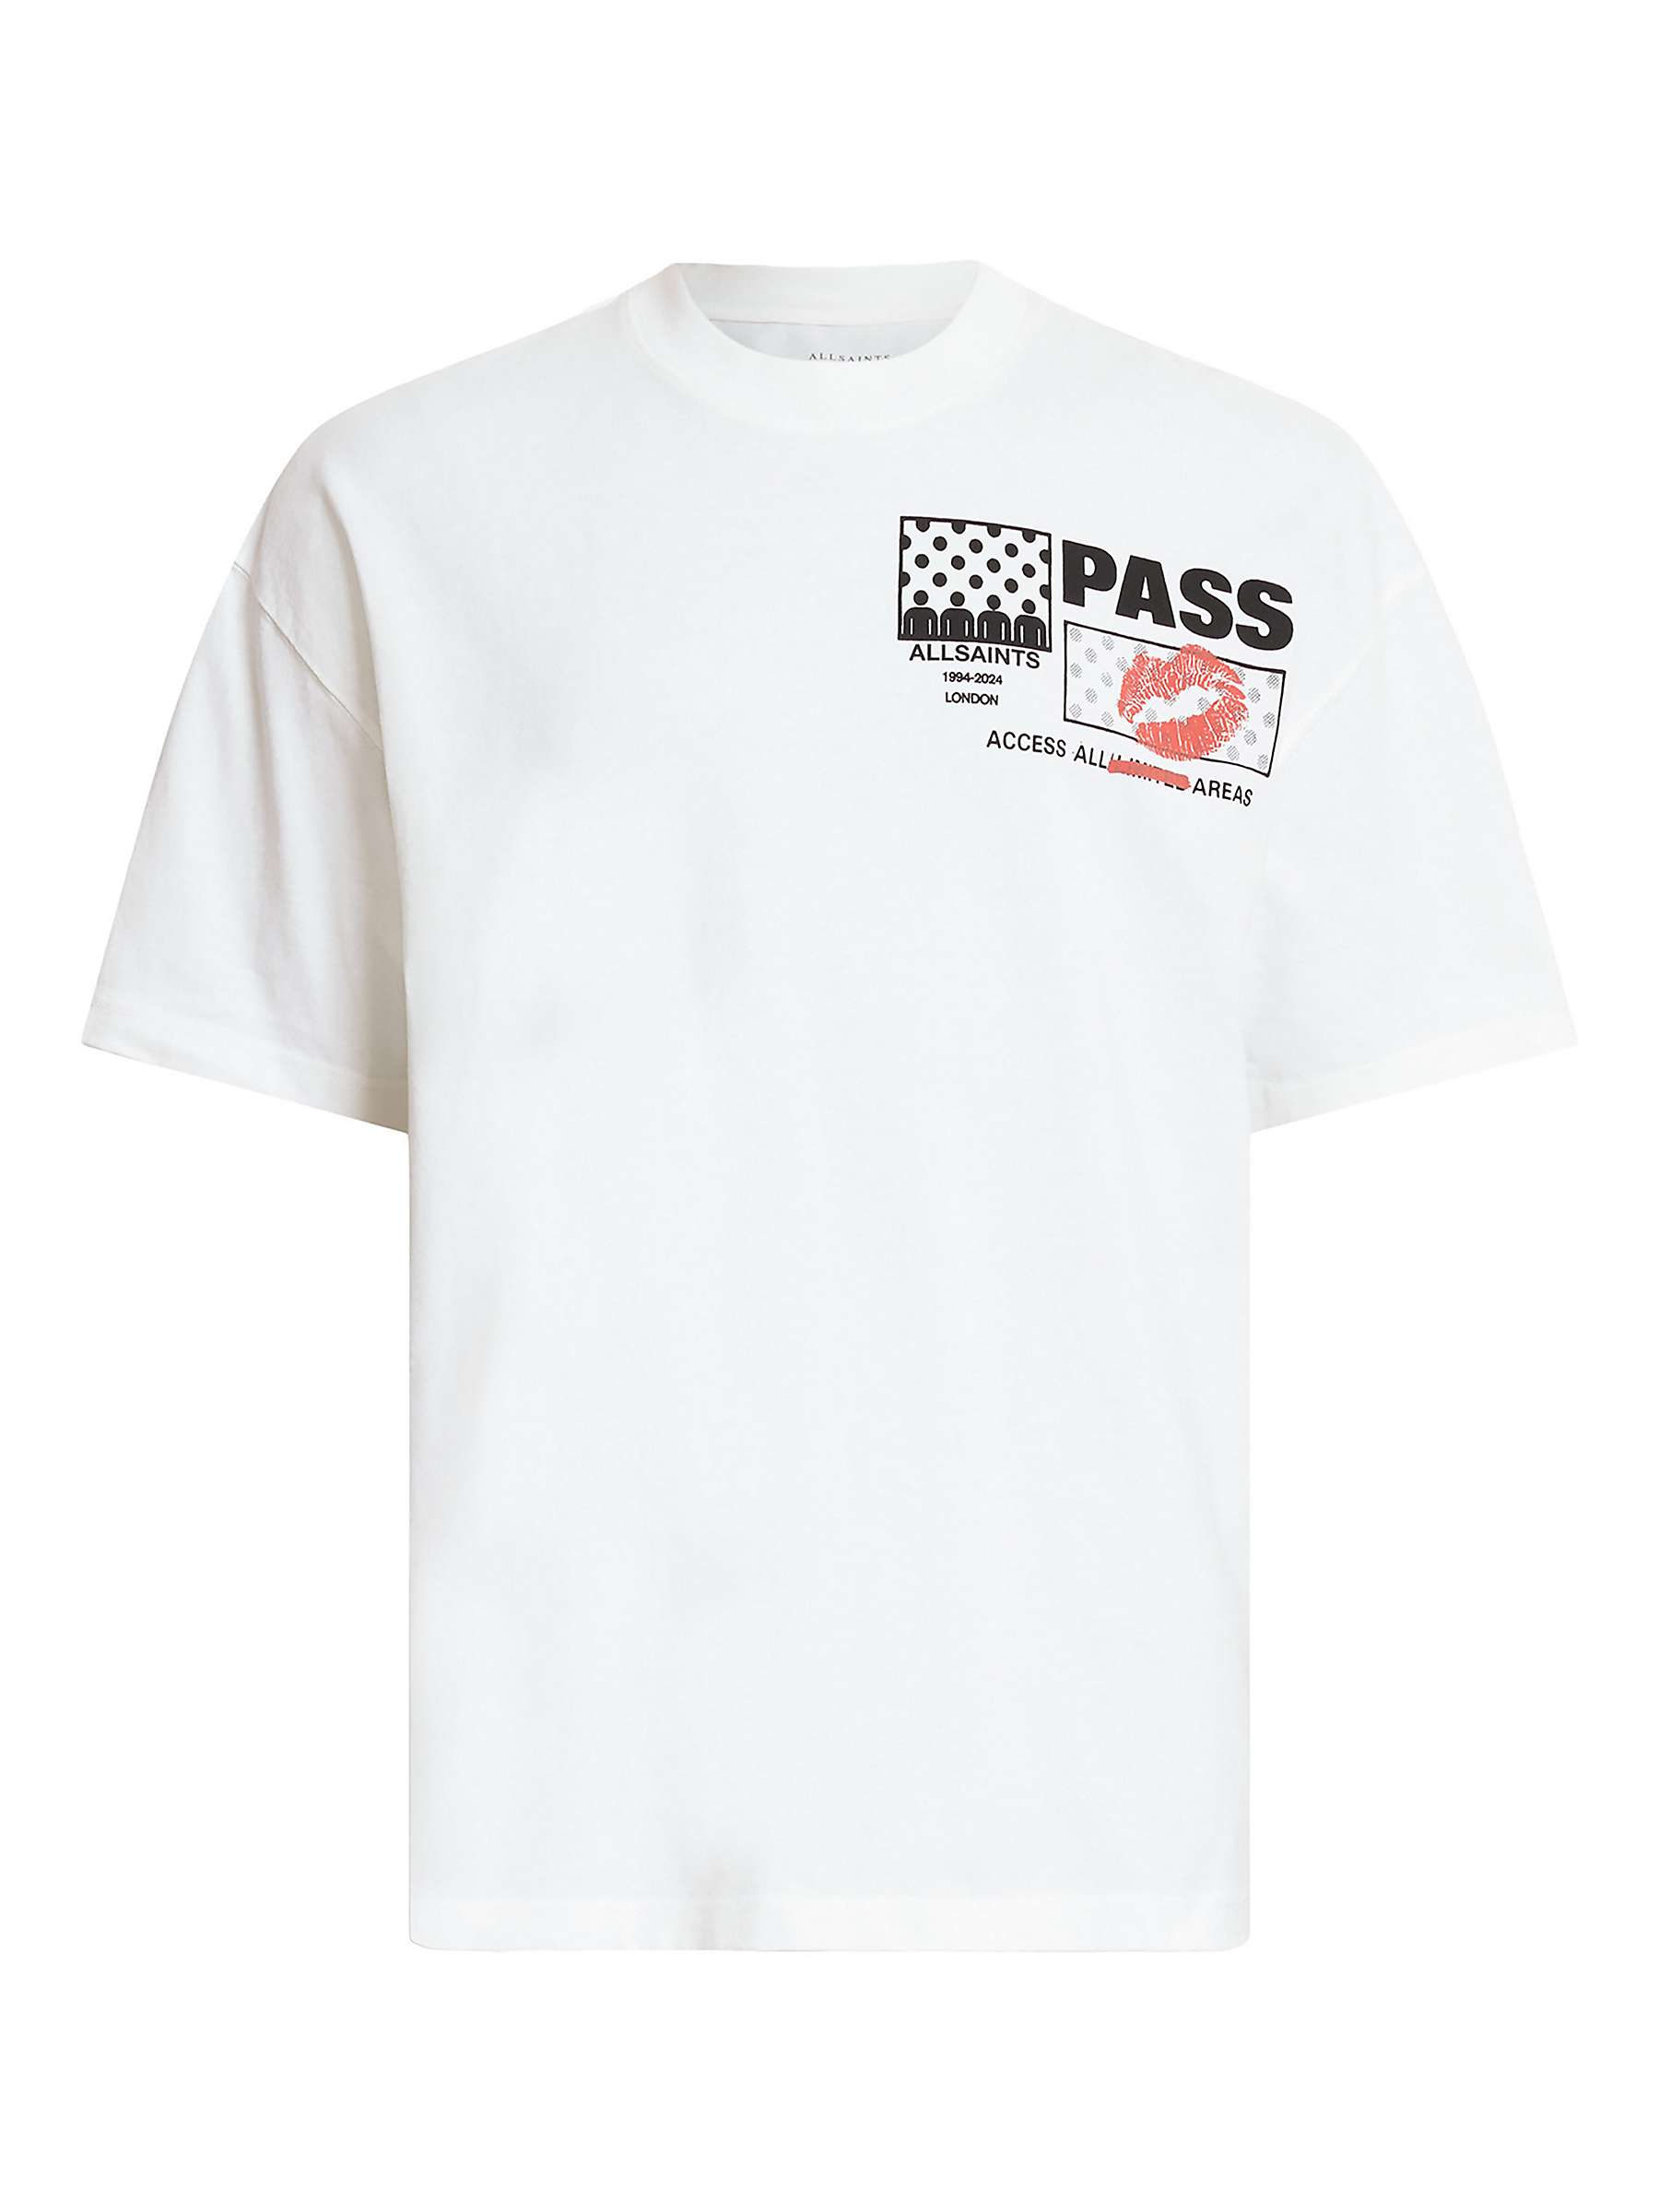 Buy AllSaints Pass Short Sleeve Crew T-Shirt, Optic White Online at johnlewis.com